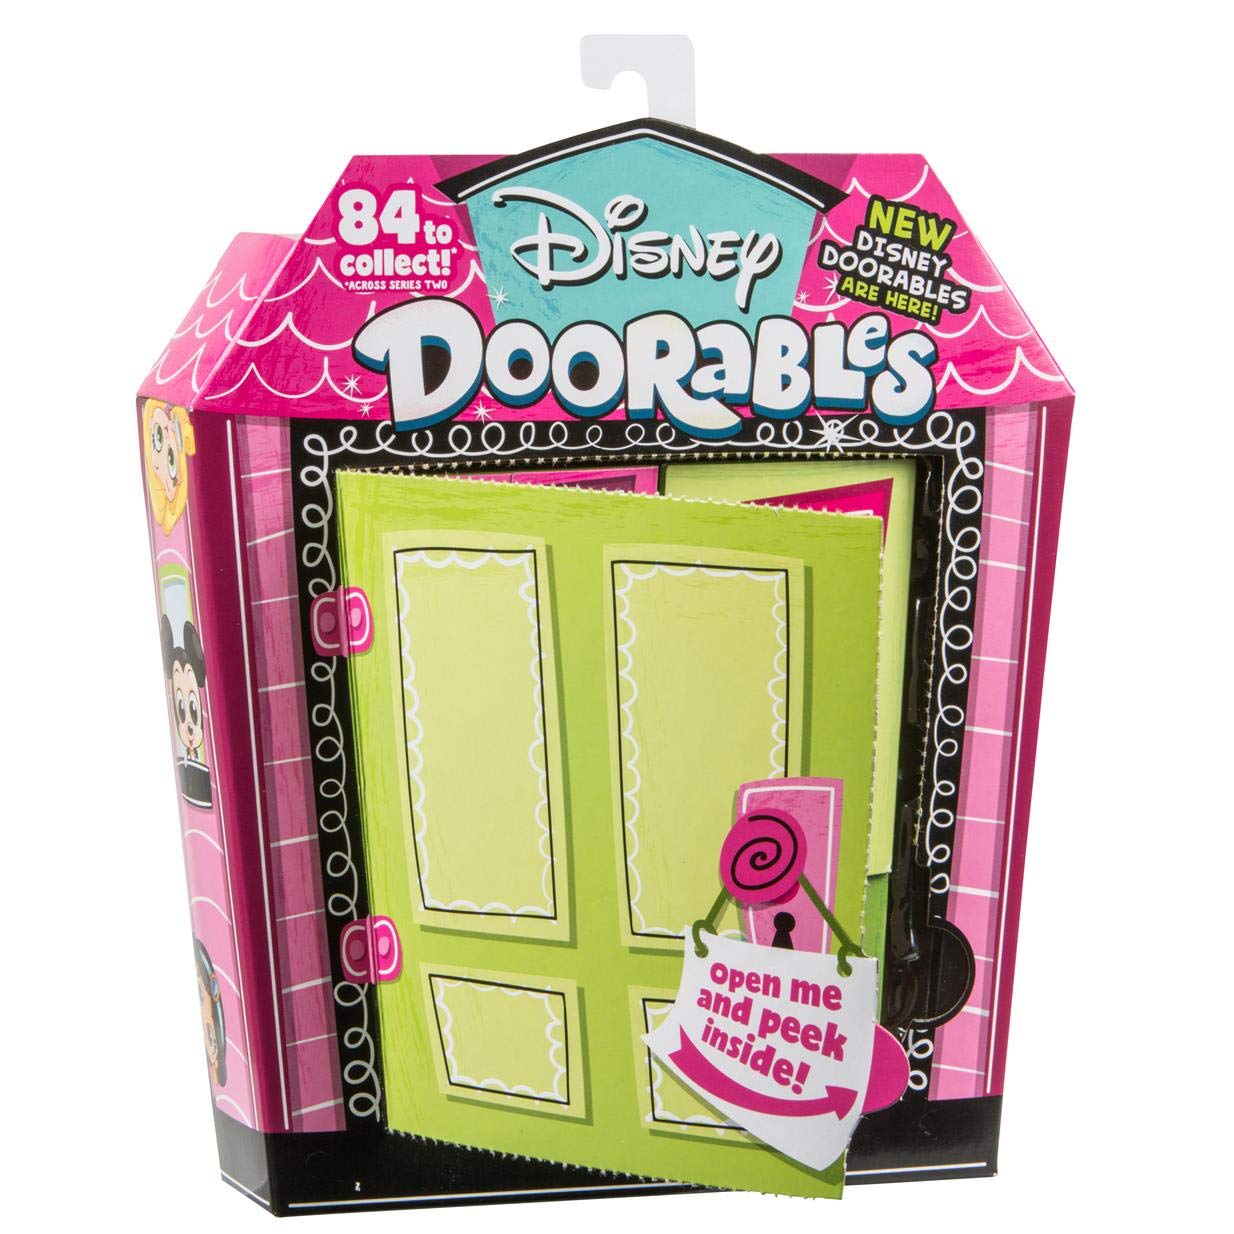 Disney Doorables Multi Peek Toy Figure - 84pcs, New Season, Multicolor, Ages 5+